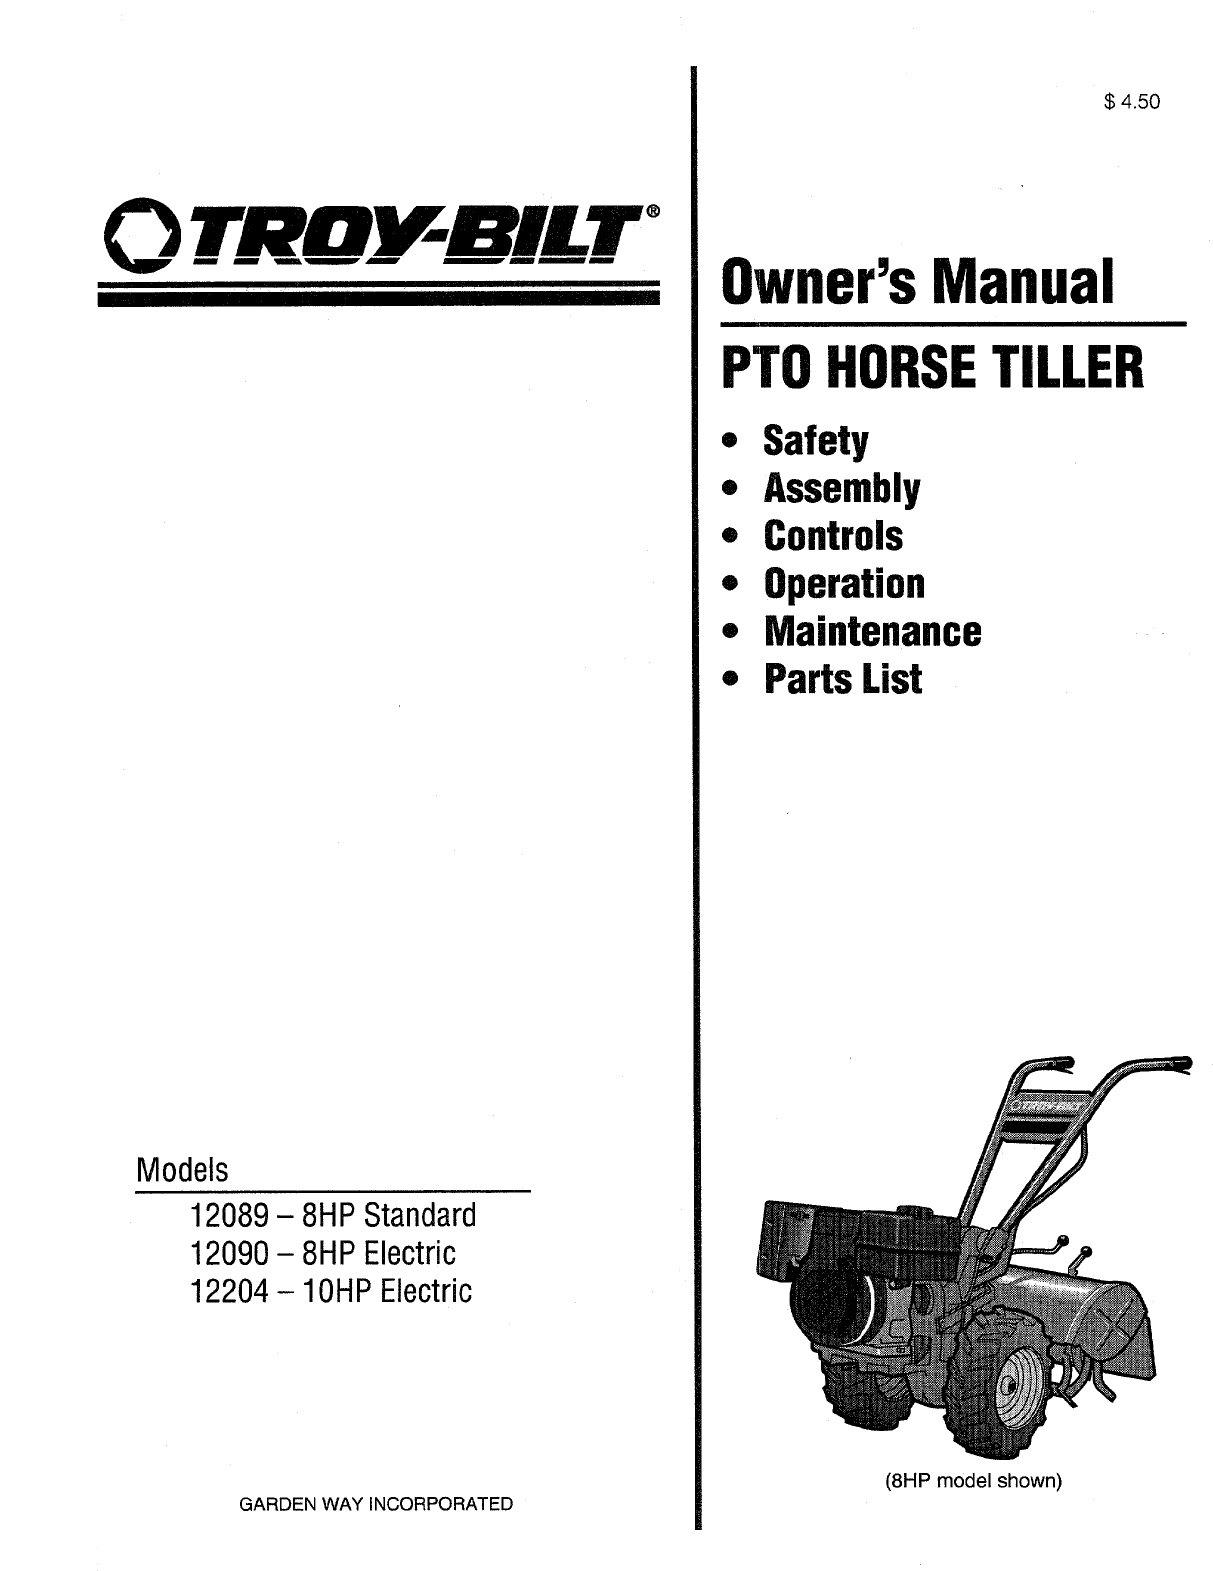 A95fa08 Troy Bilt Owner Manual Tiller Wiring Library